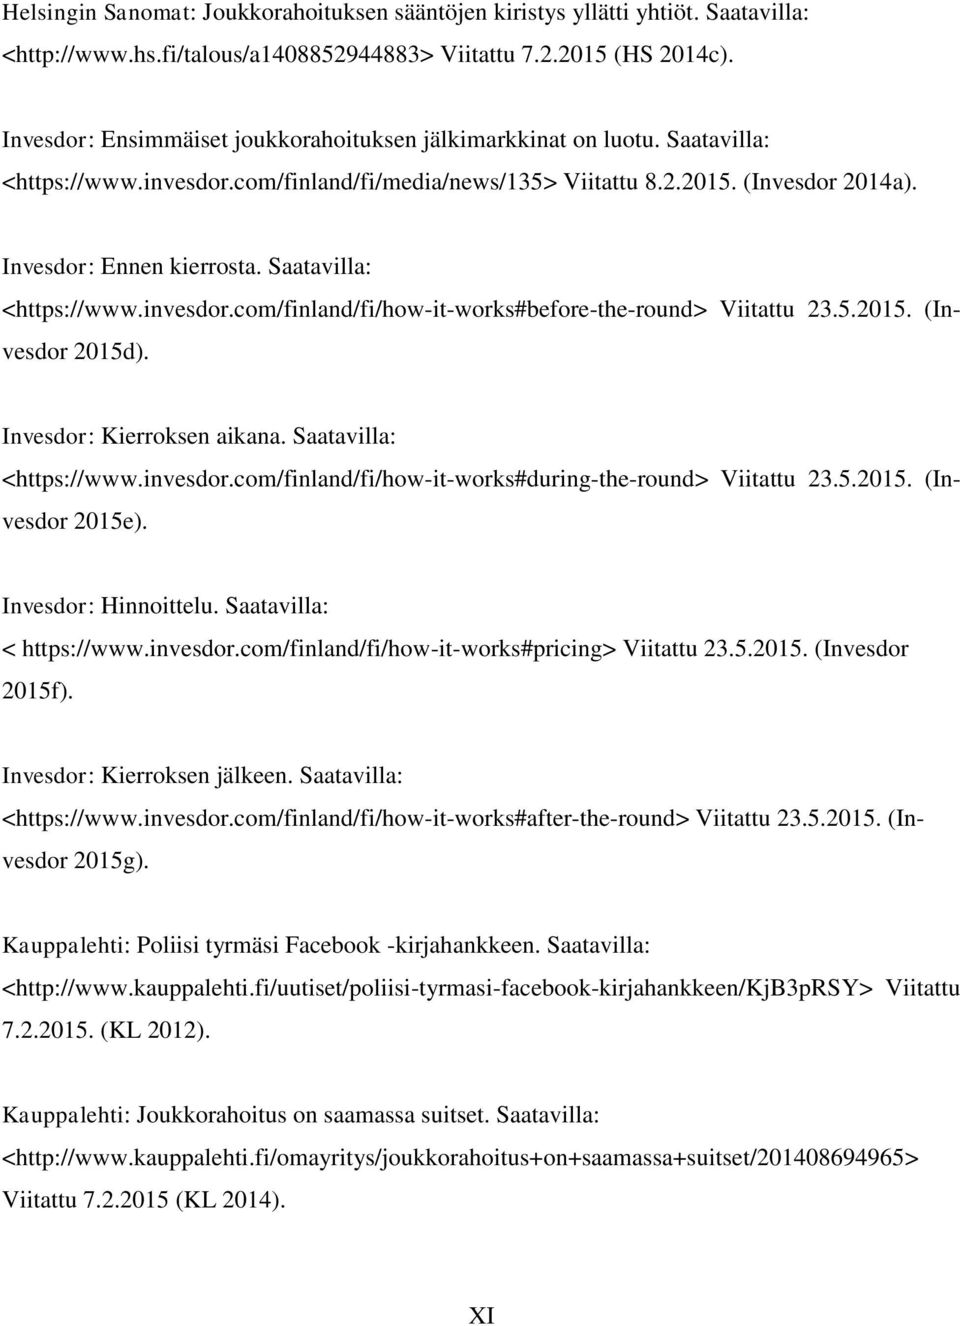 Saatavilla: <https://www.invesdor.com/finland/fi/how-it-works#before-the-round> Viitattu 23.5.2015. (Invesdor 2015d). Invesdor: Kierroksen aikana. Saatavilla: <https://www.invesdor.com/finland/fi/how-it-works#during-the-round> Viitattu 23.